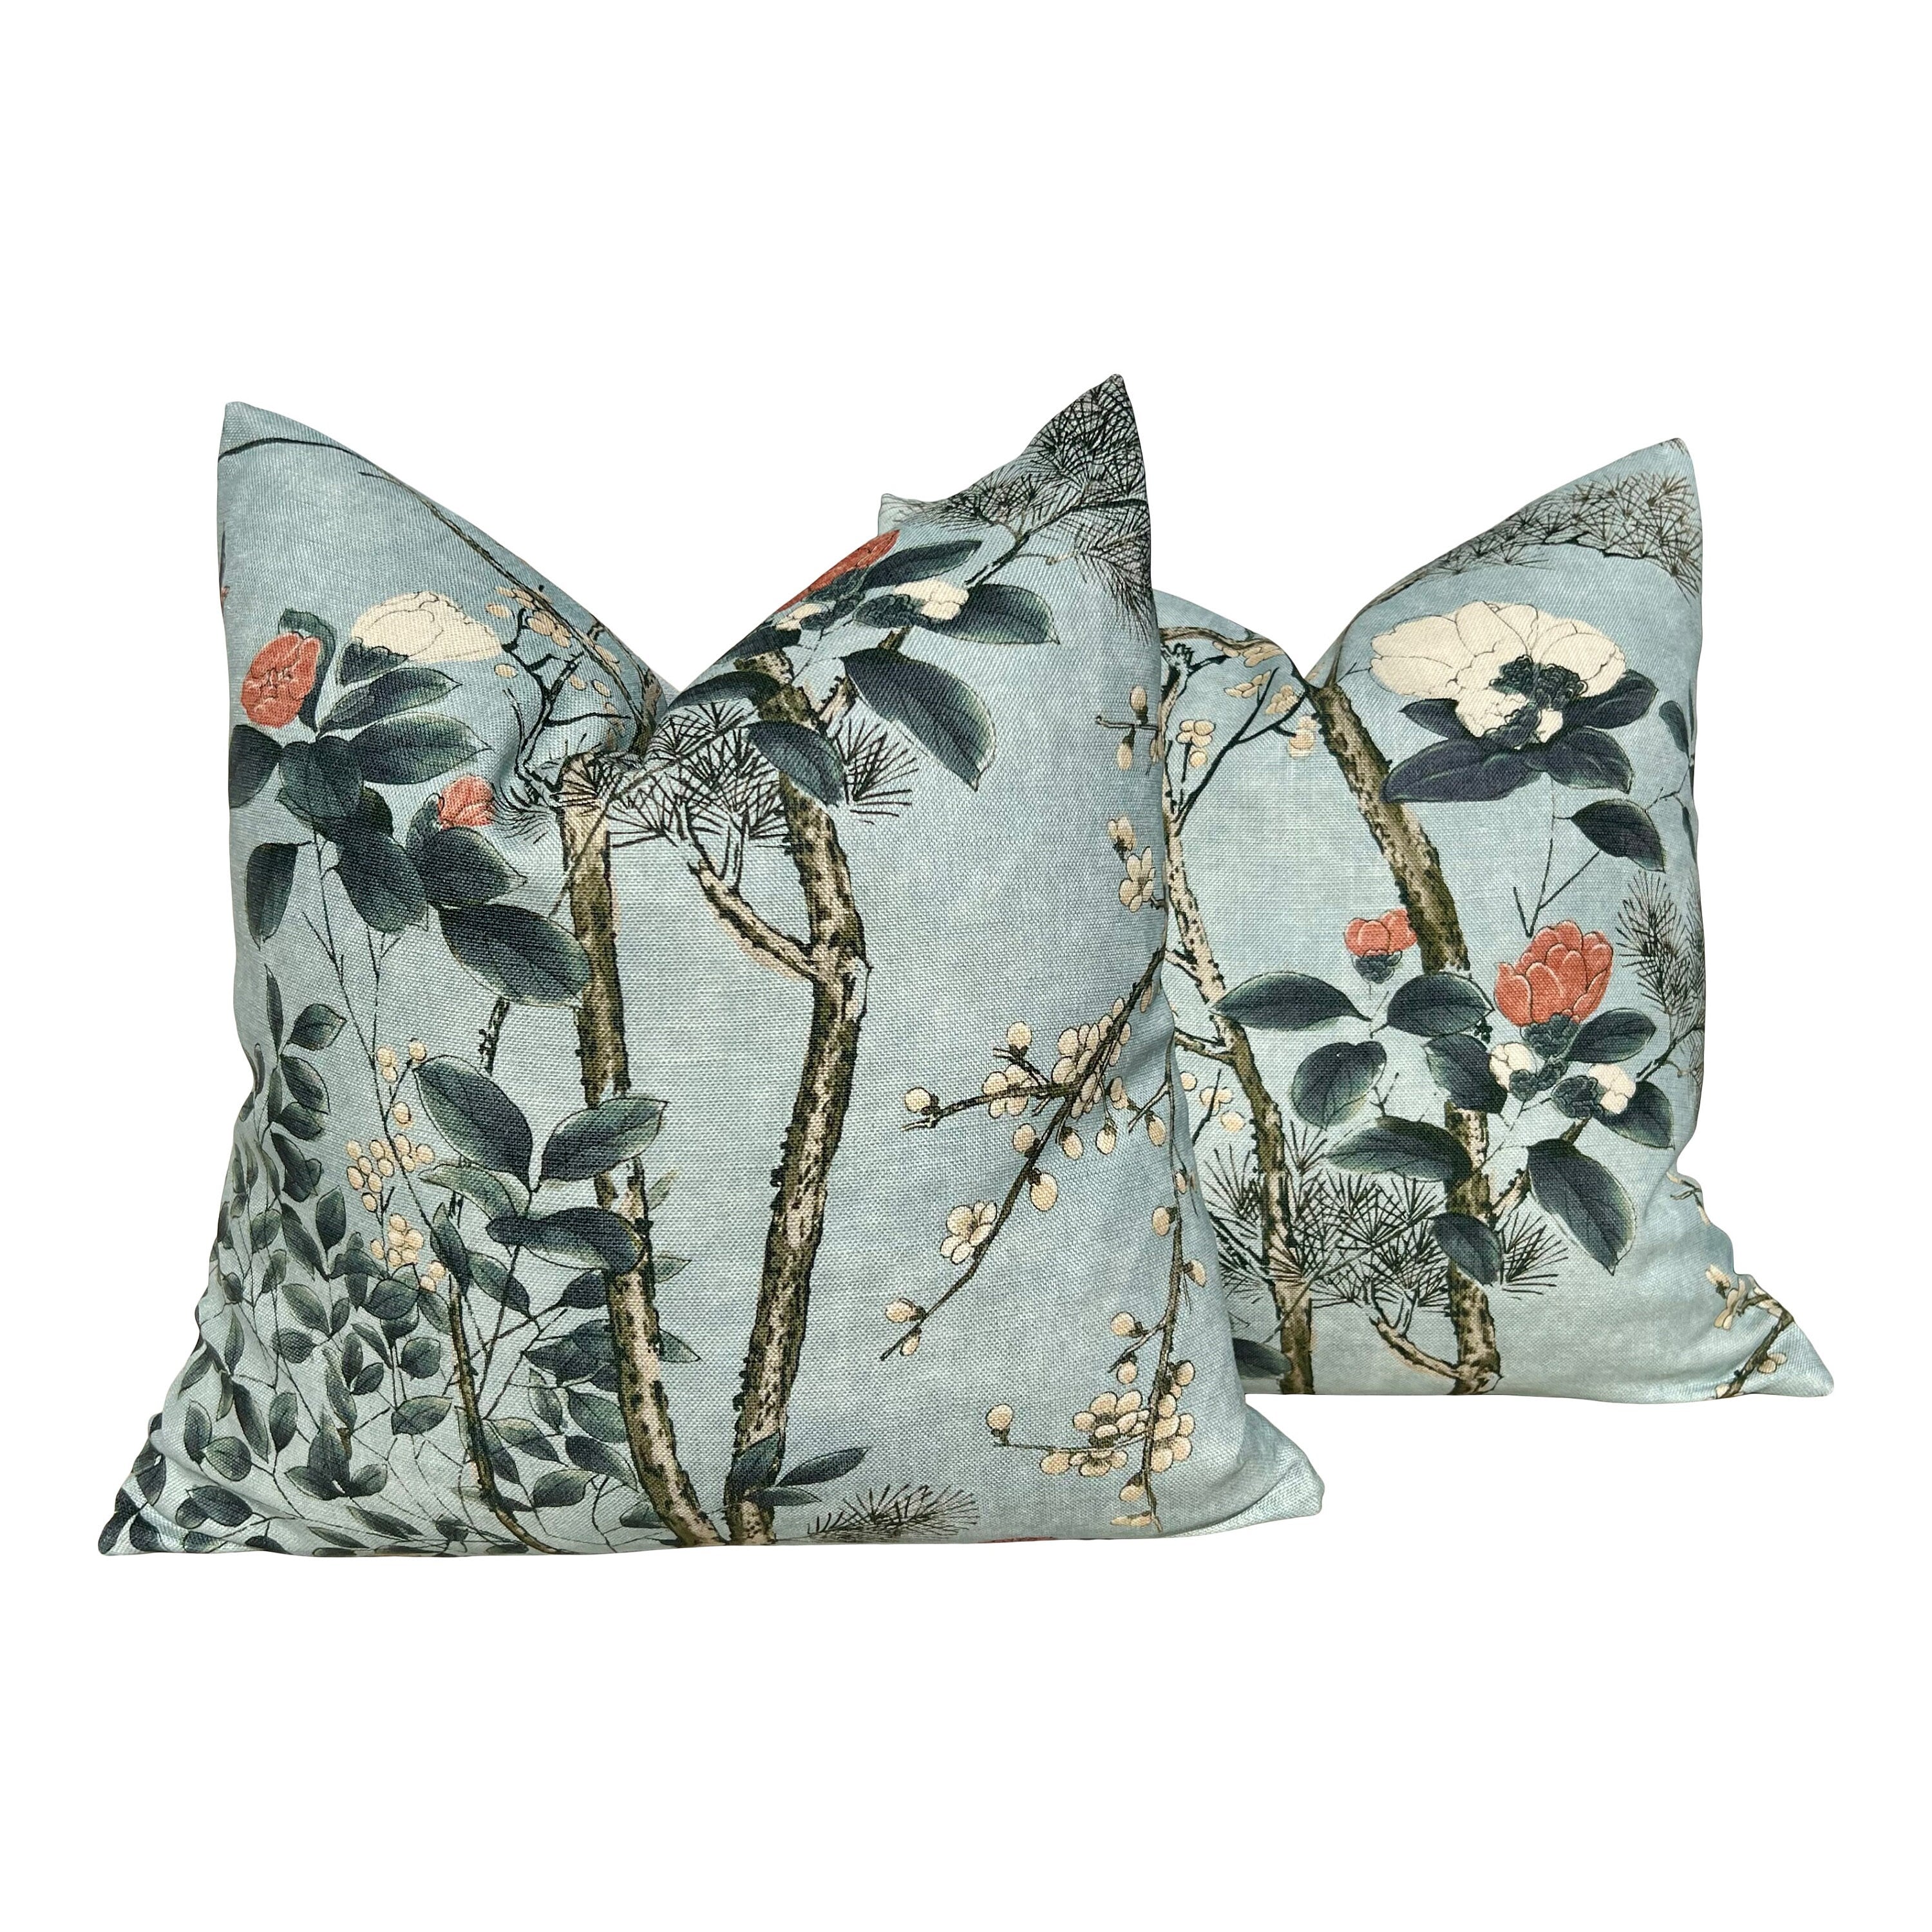 Katsura Pillow in Mist. Designer Aqua Pillows, High End Floral Pillow Case, Euro Sham Cover, Decorative Lumbar Pillows, Bedroom Floral Decor